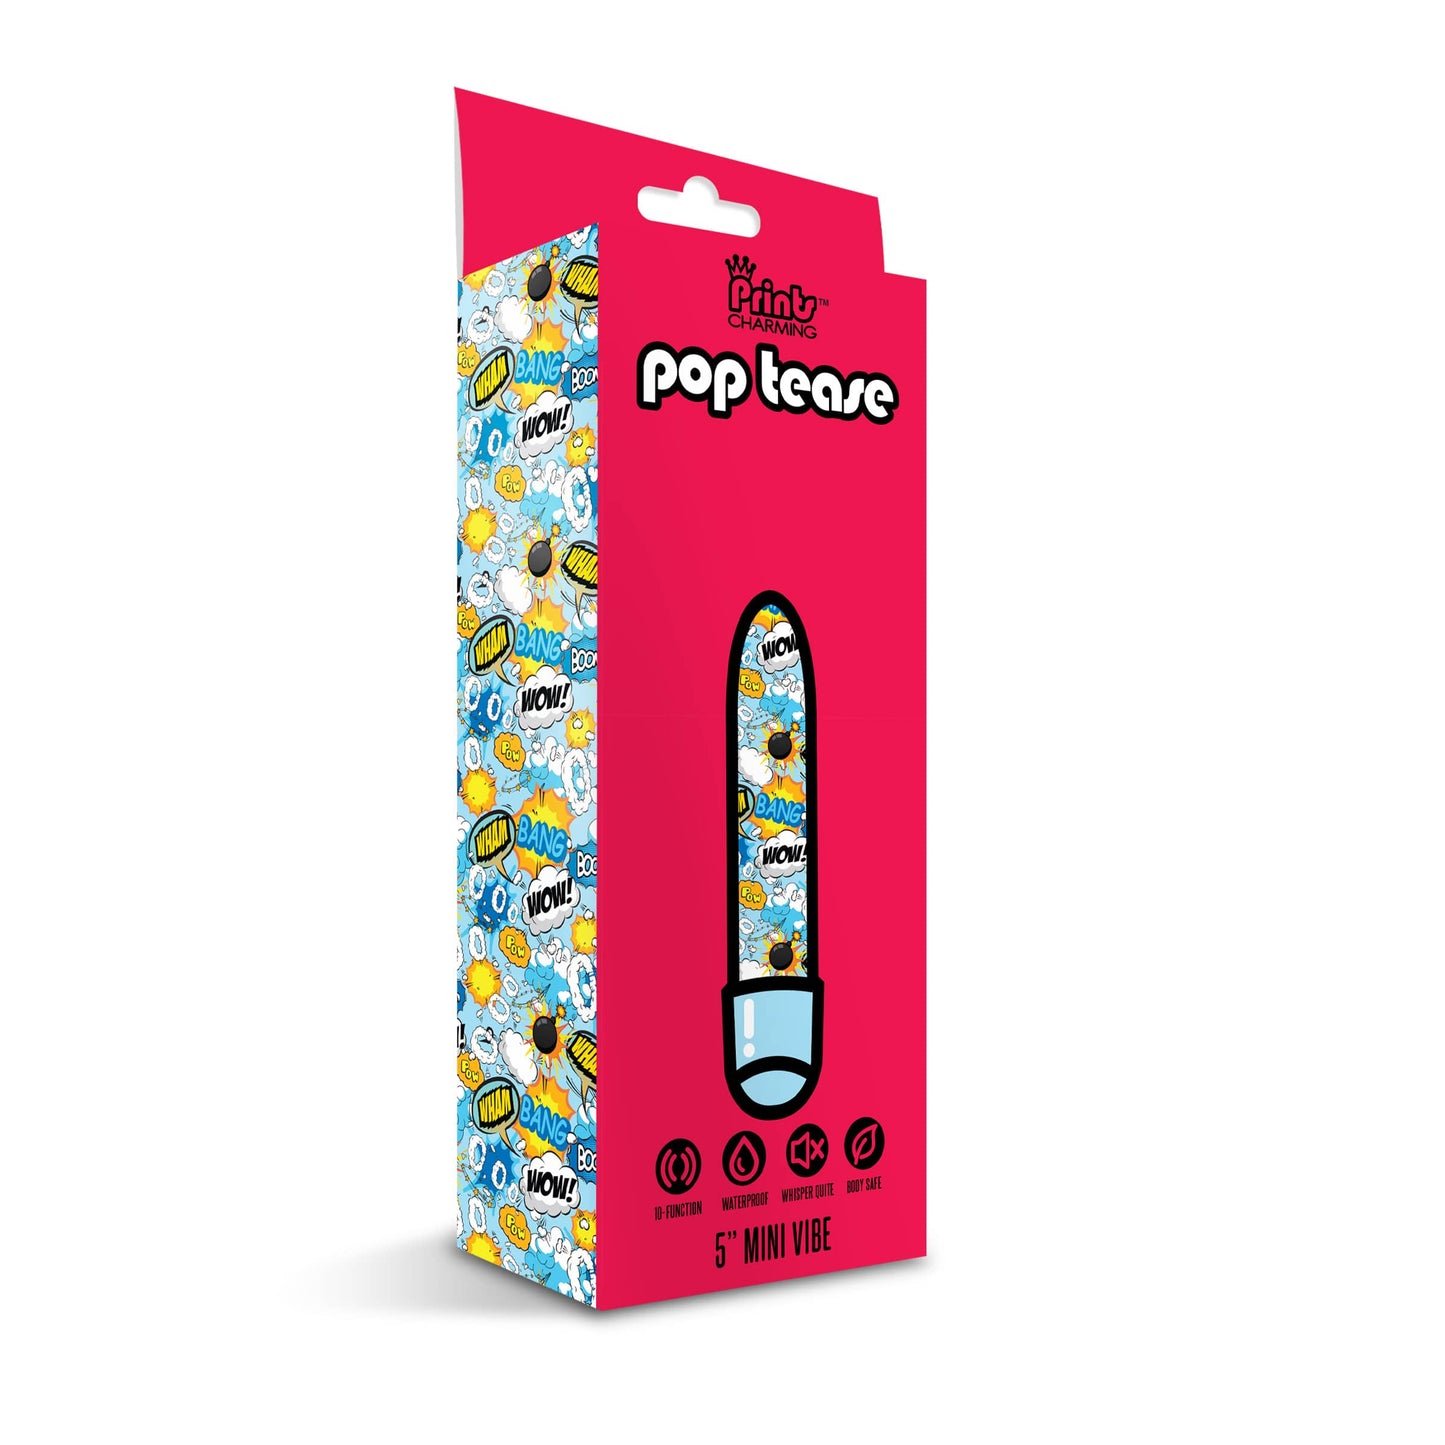 Prints Charming Pop Tease 5" Mini Vibrator, Wham, Blue w/storage bag - The Happy Ending Shop